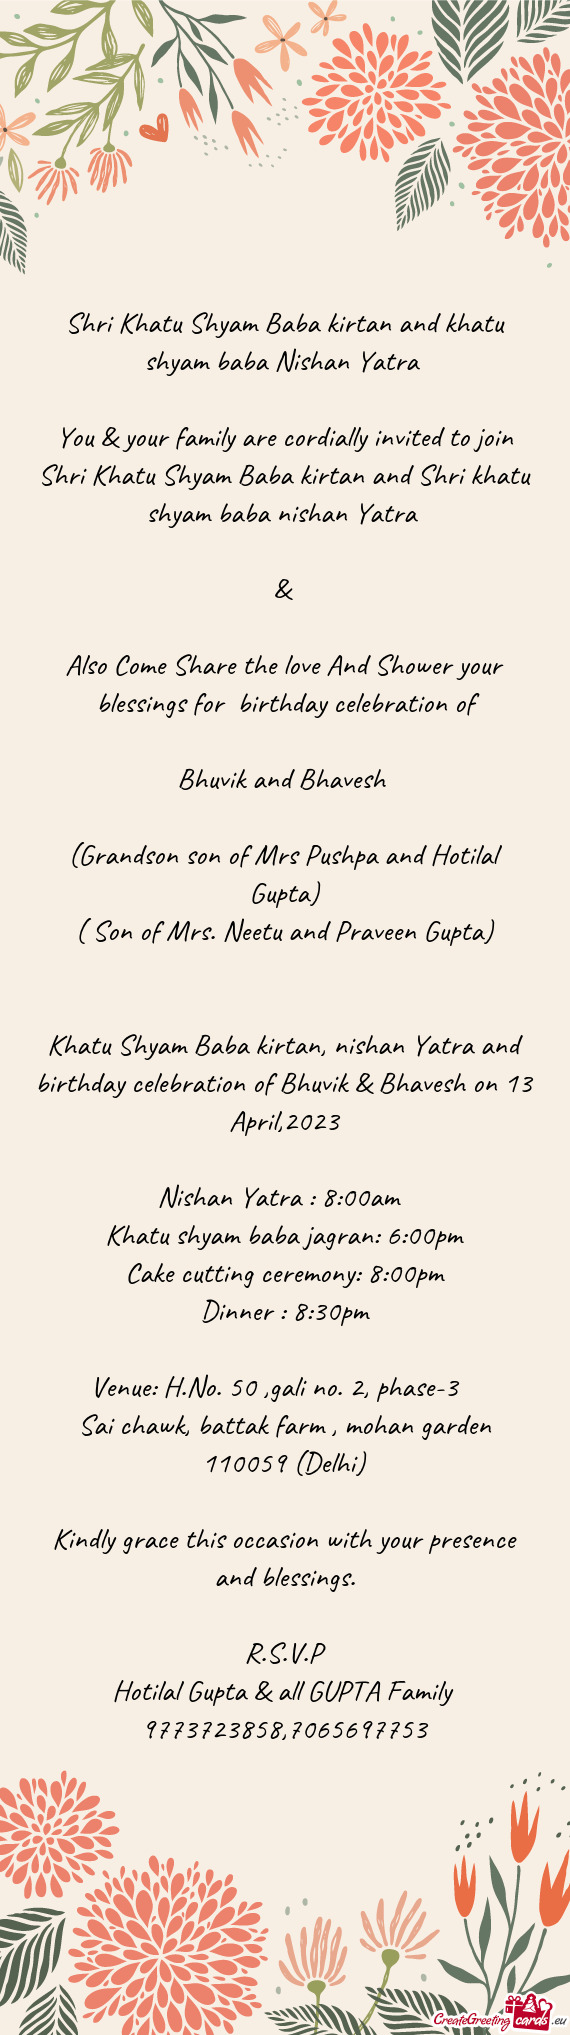 You & your family are cordially invited to join Shri Khatu Shyam Baba kirtan and Shri khatu shyam ba